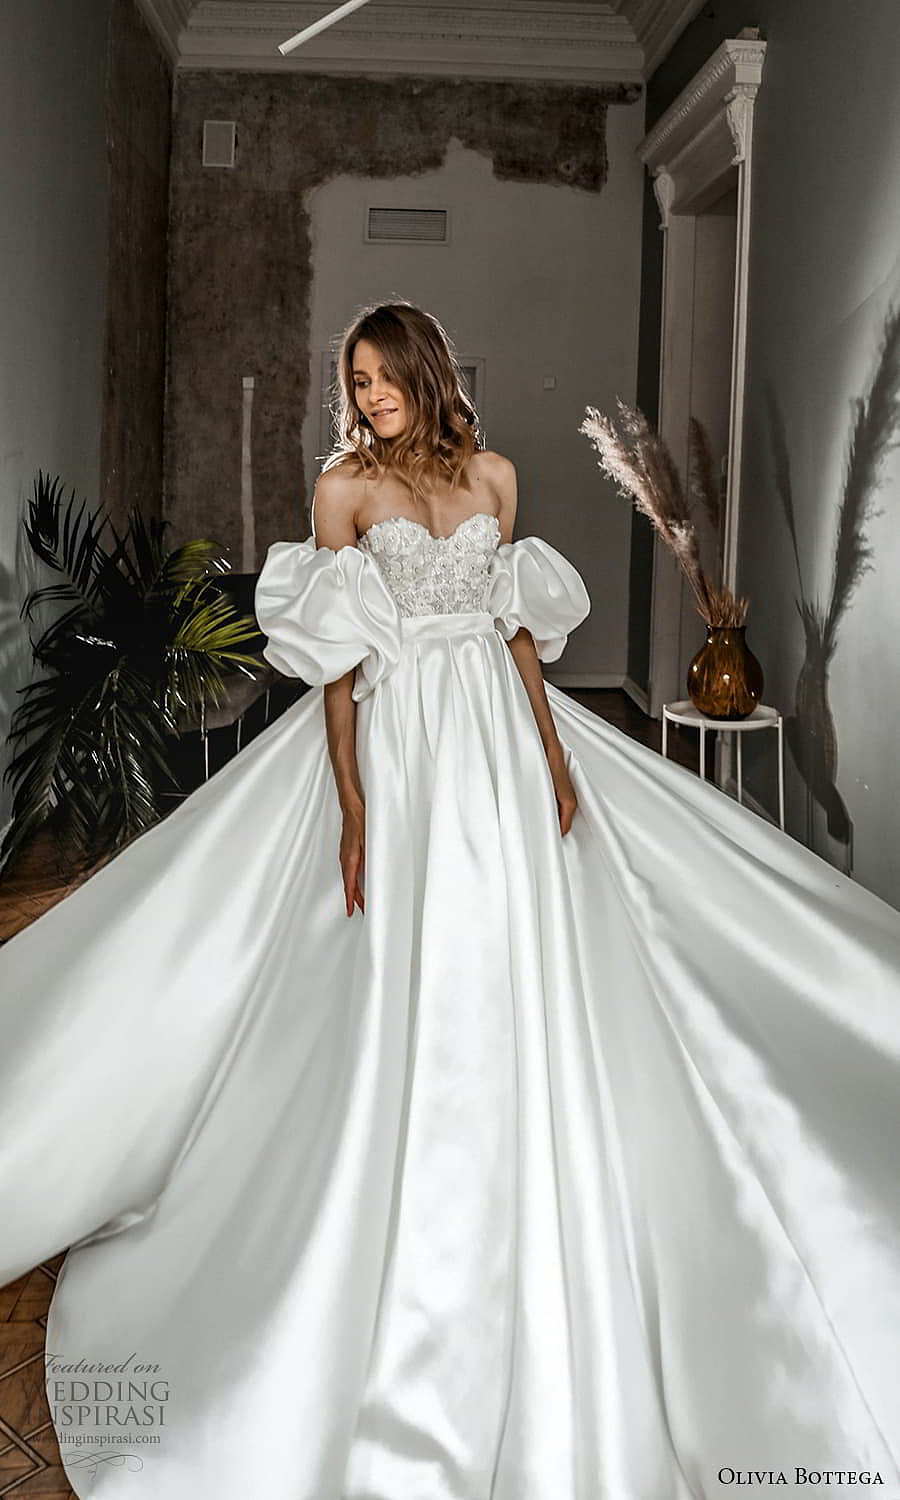 Olivia Bottega Pret-a-Porter 新娘系列 优雅百搭新娘嫁衣 - 26